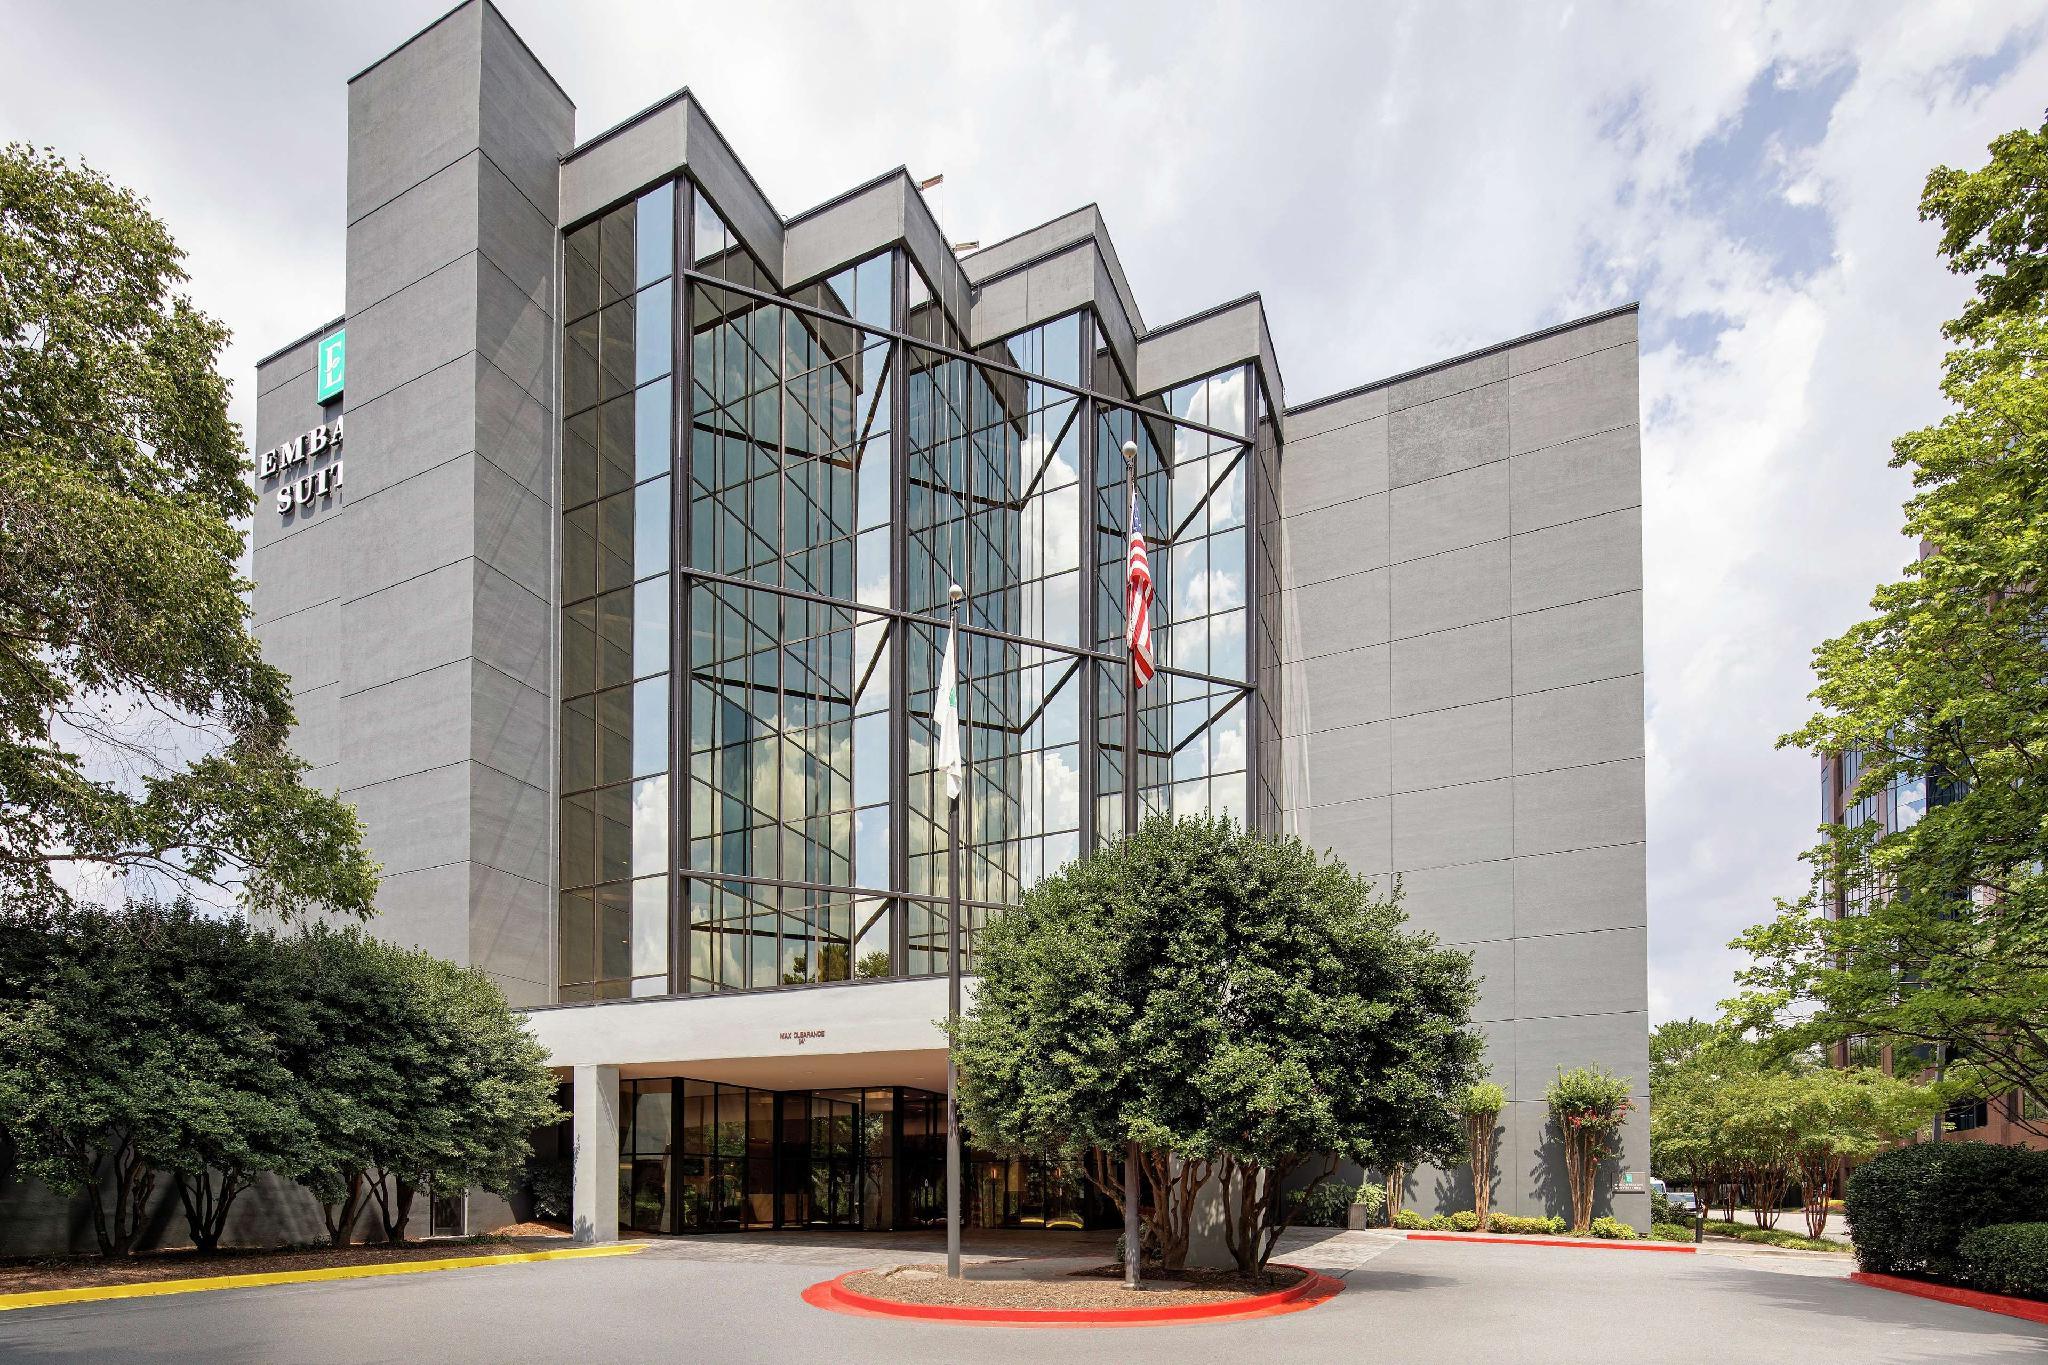 Embassy Suites by Hilton Atlanta Perimeter Center 写真